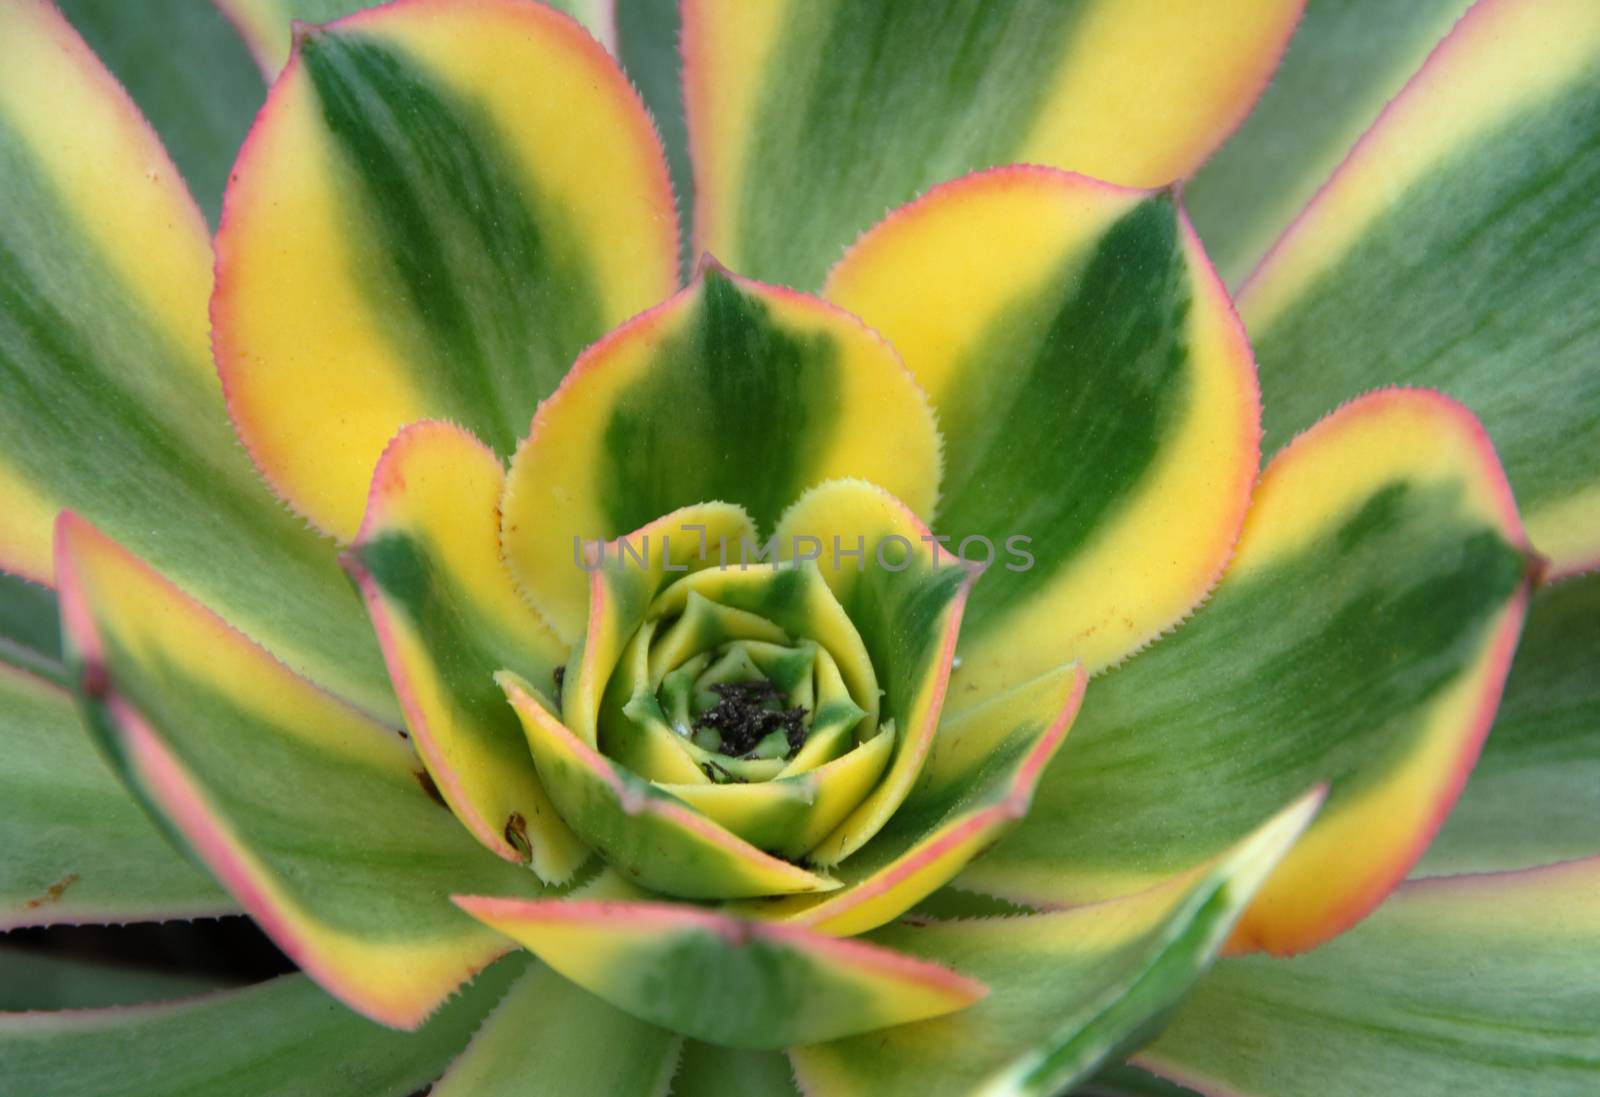 green yellow Aeonium Sunburst succulent plant leaf closeup showing symmetry pattern